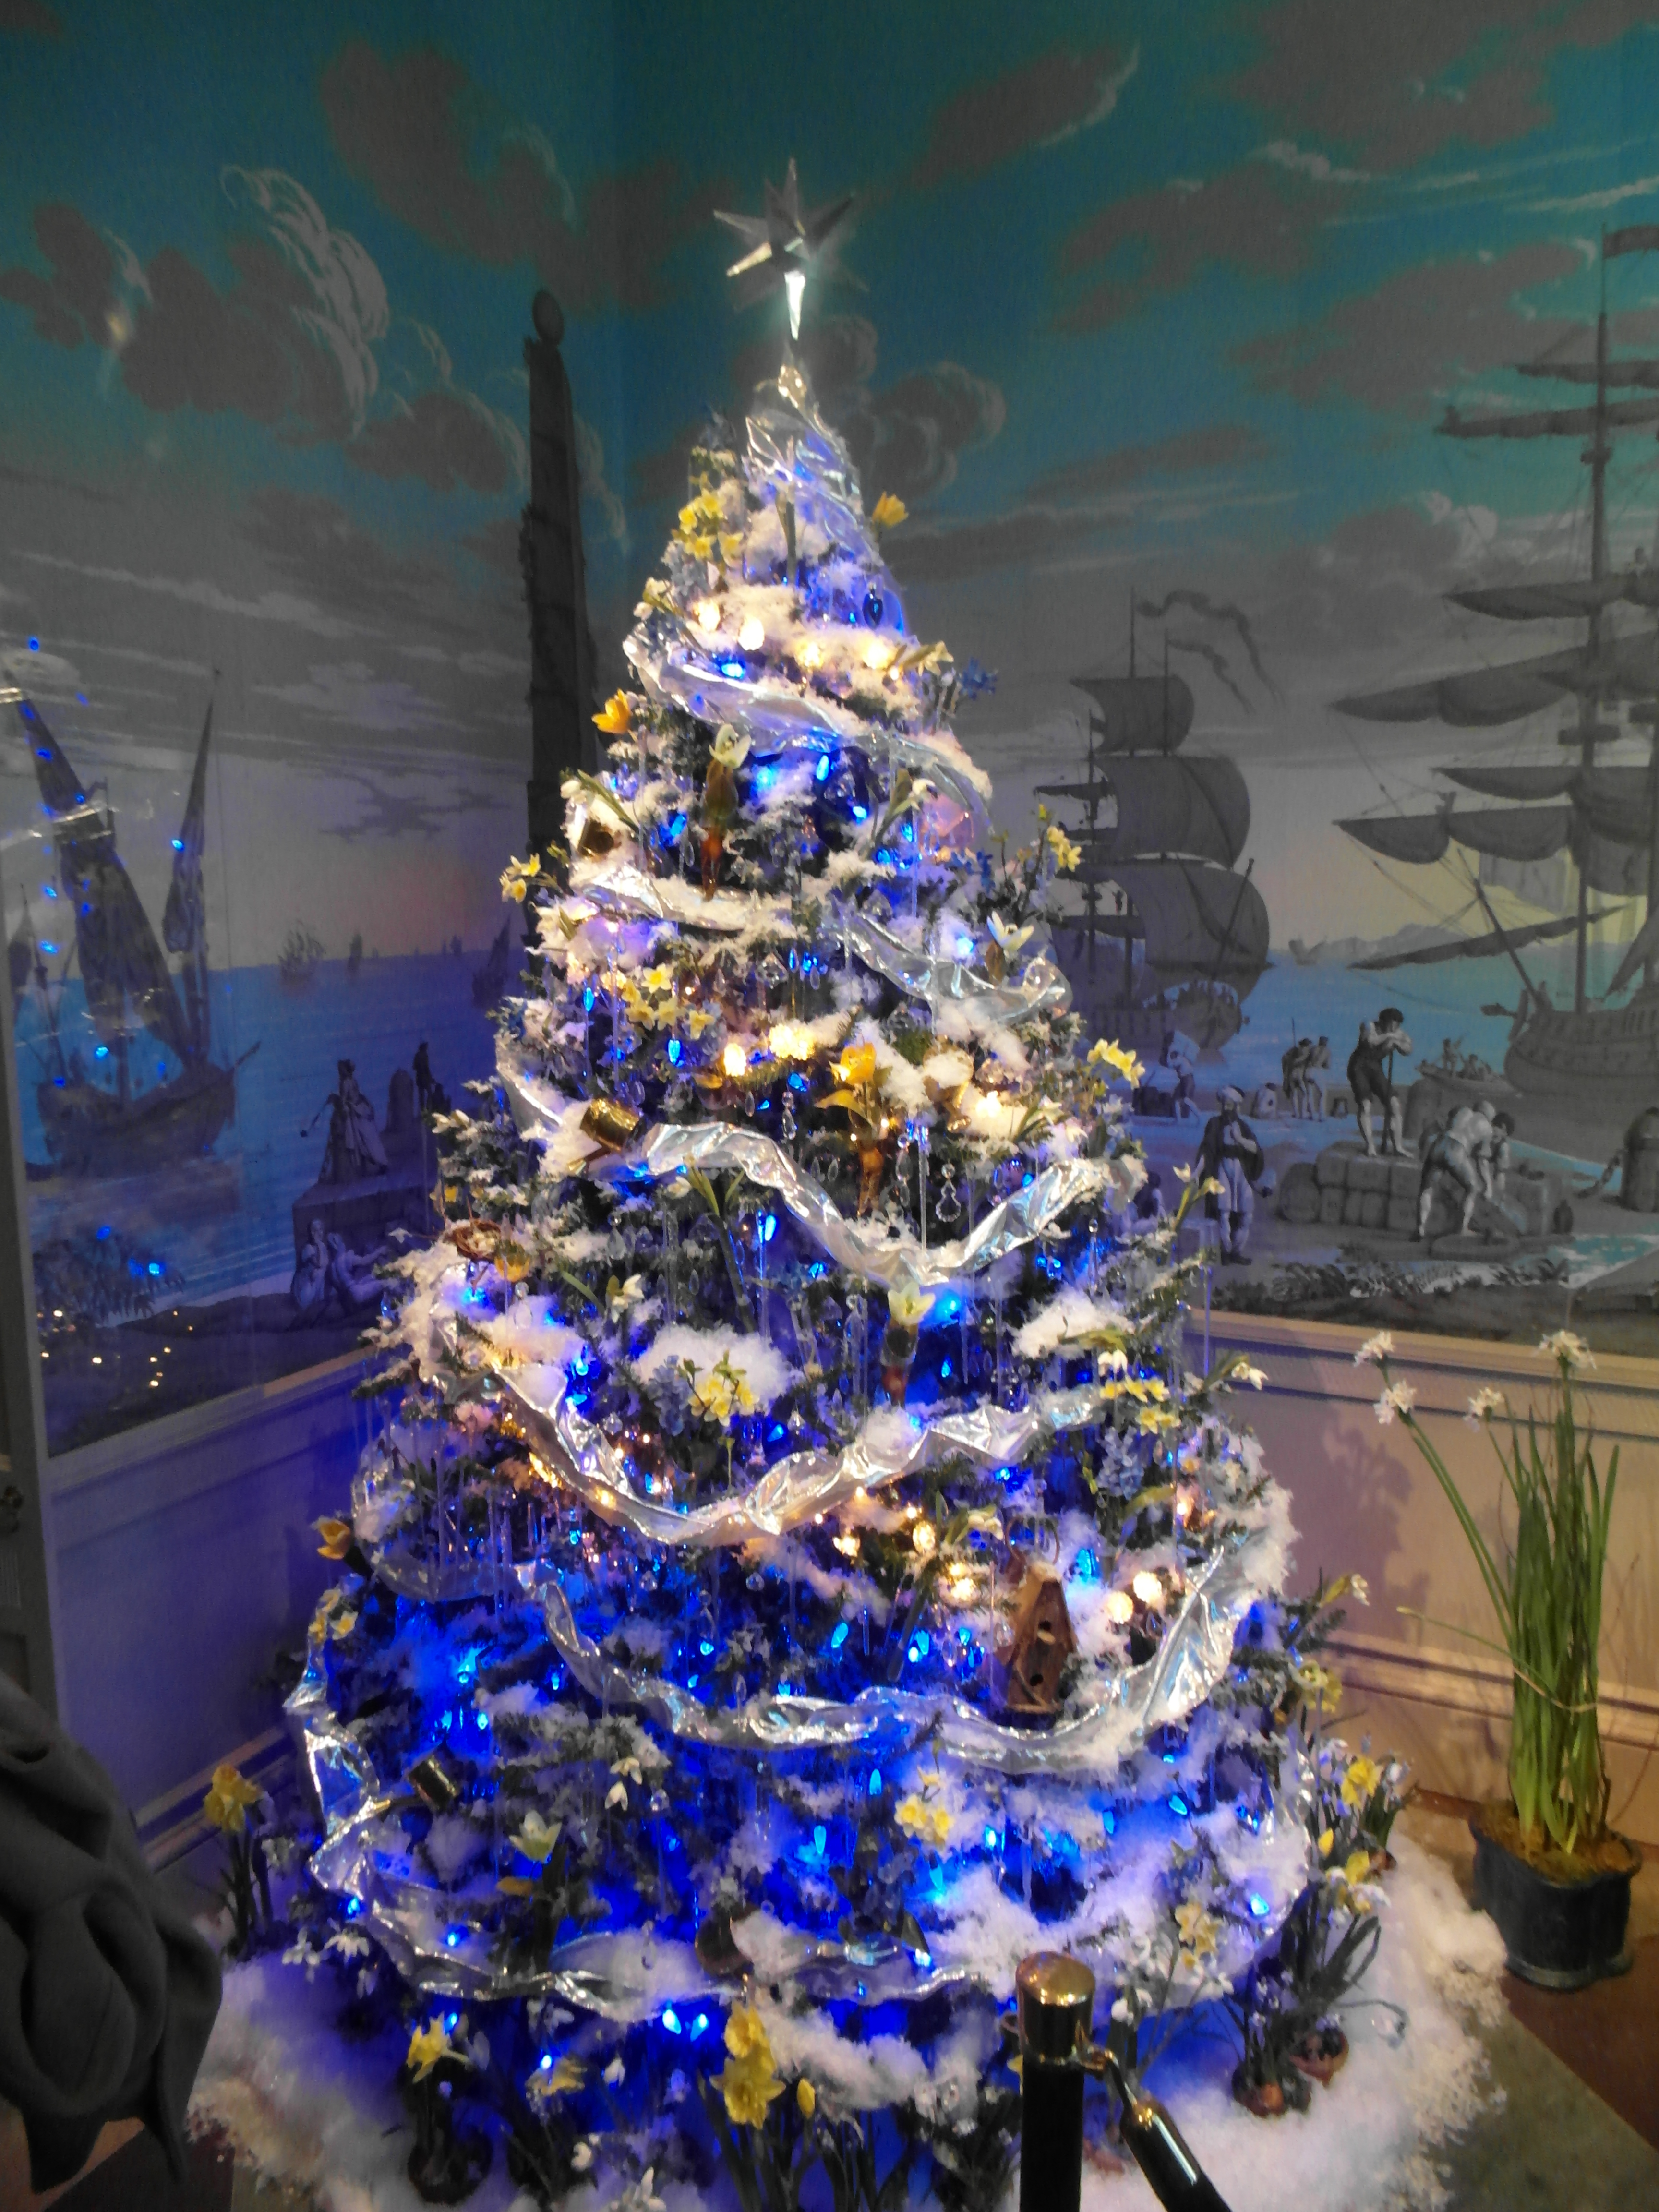 Winterthur Museum: Christmas Tree in the Winterthur mansion